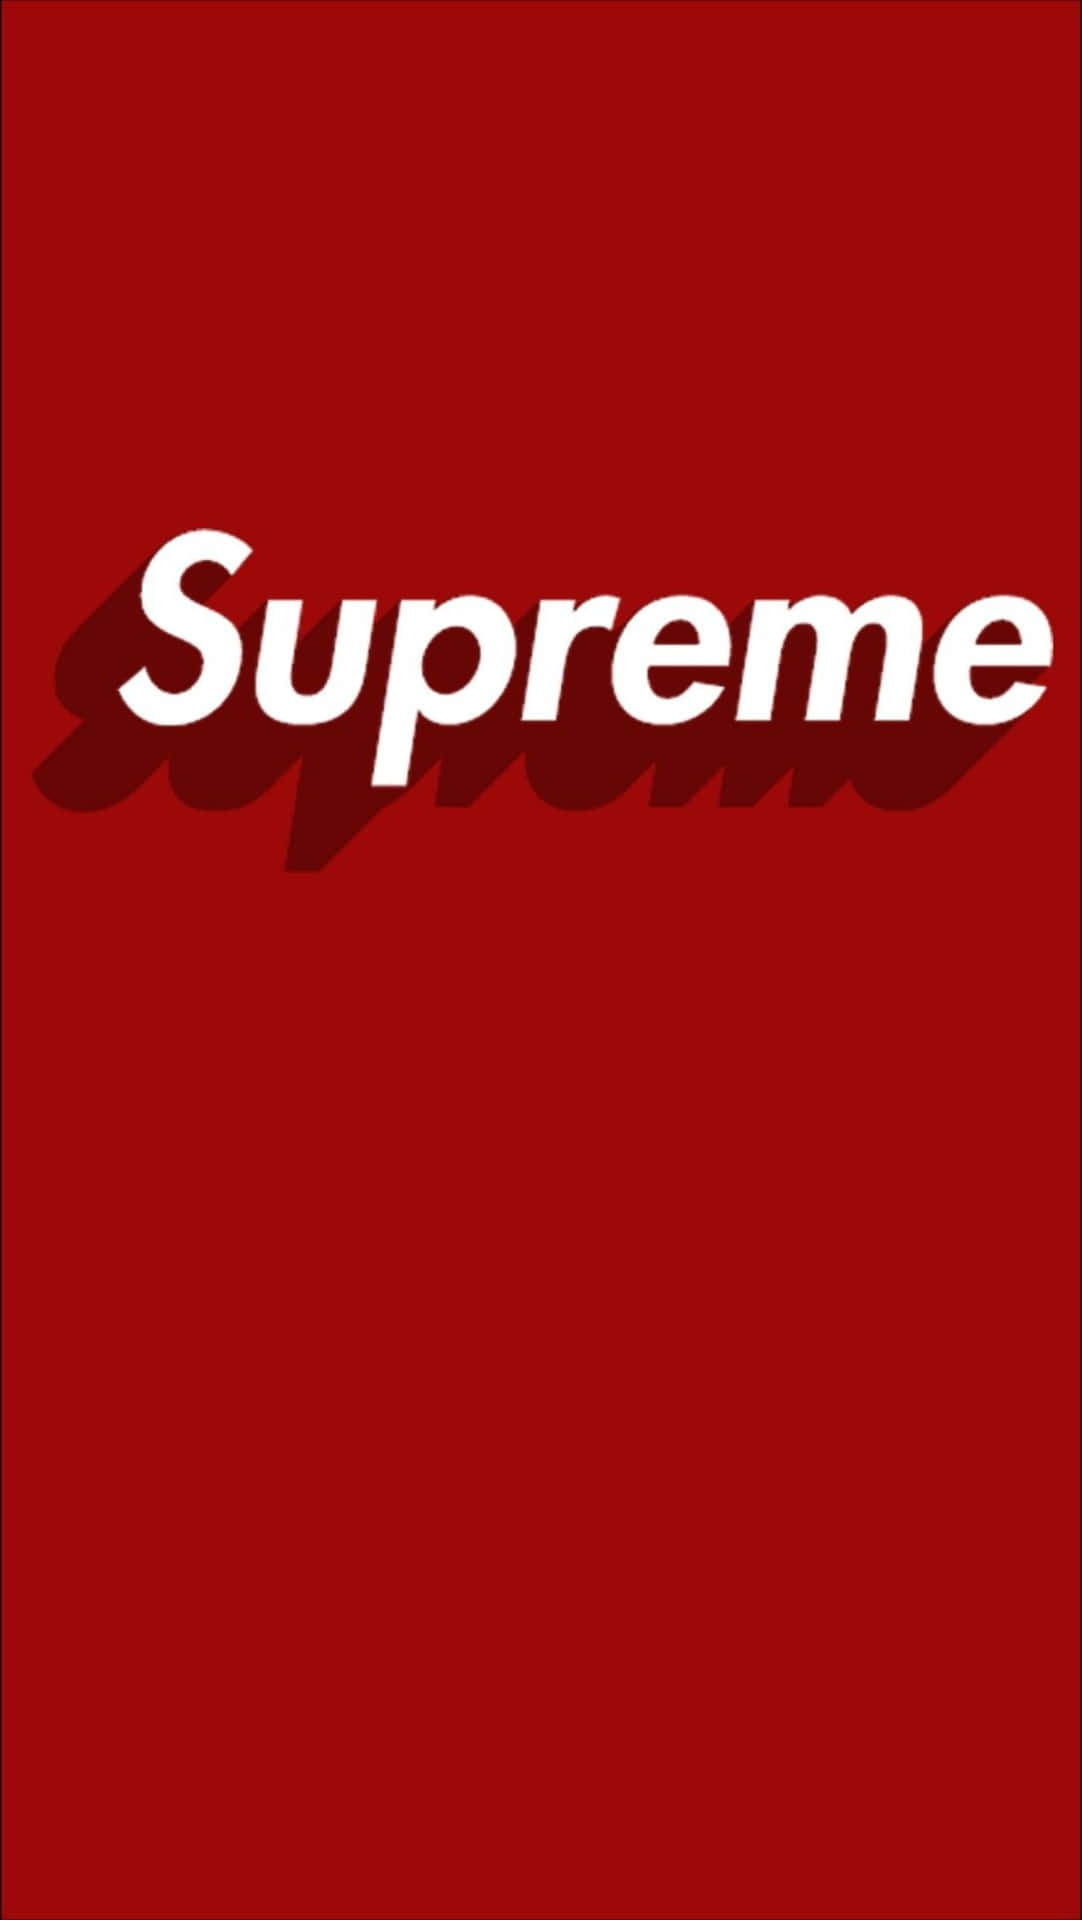 Neonsupremes Logo Wallpaper